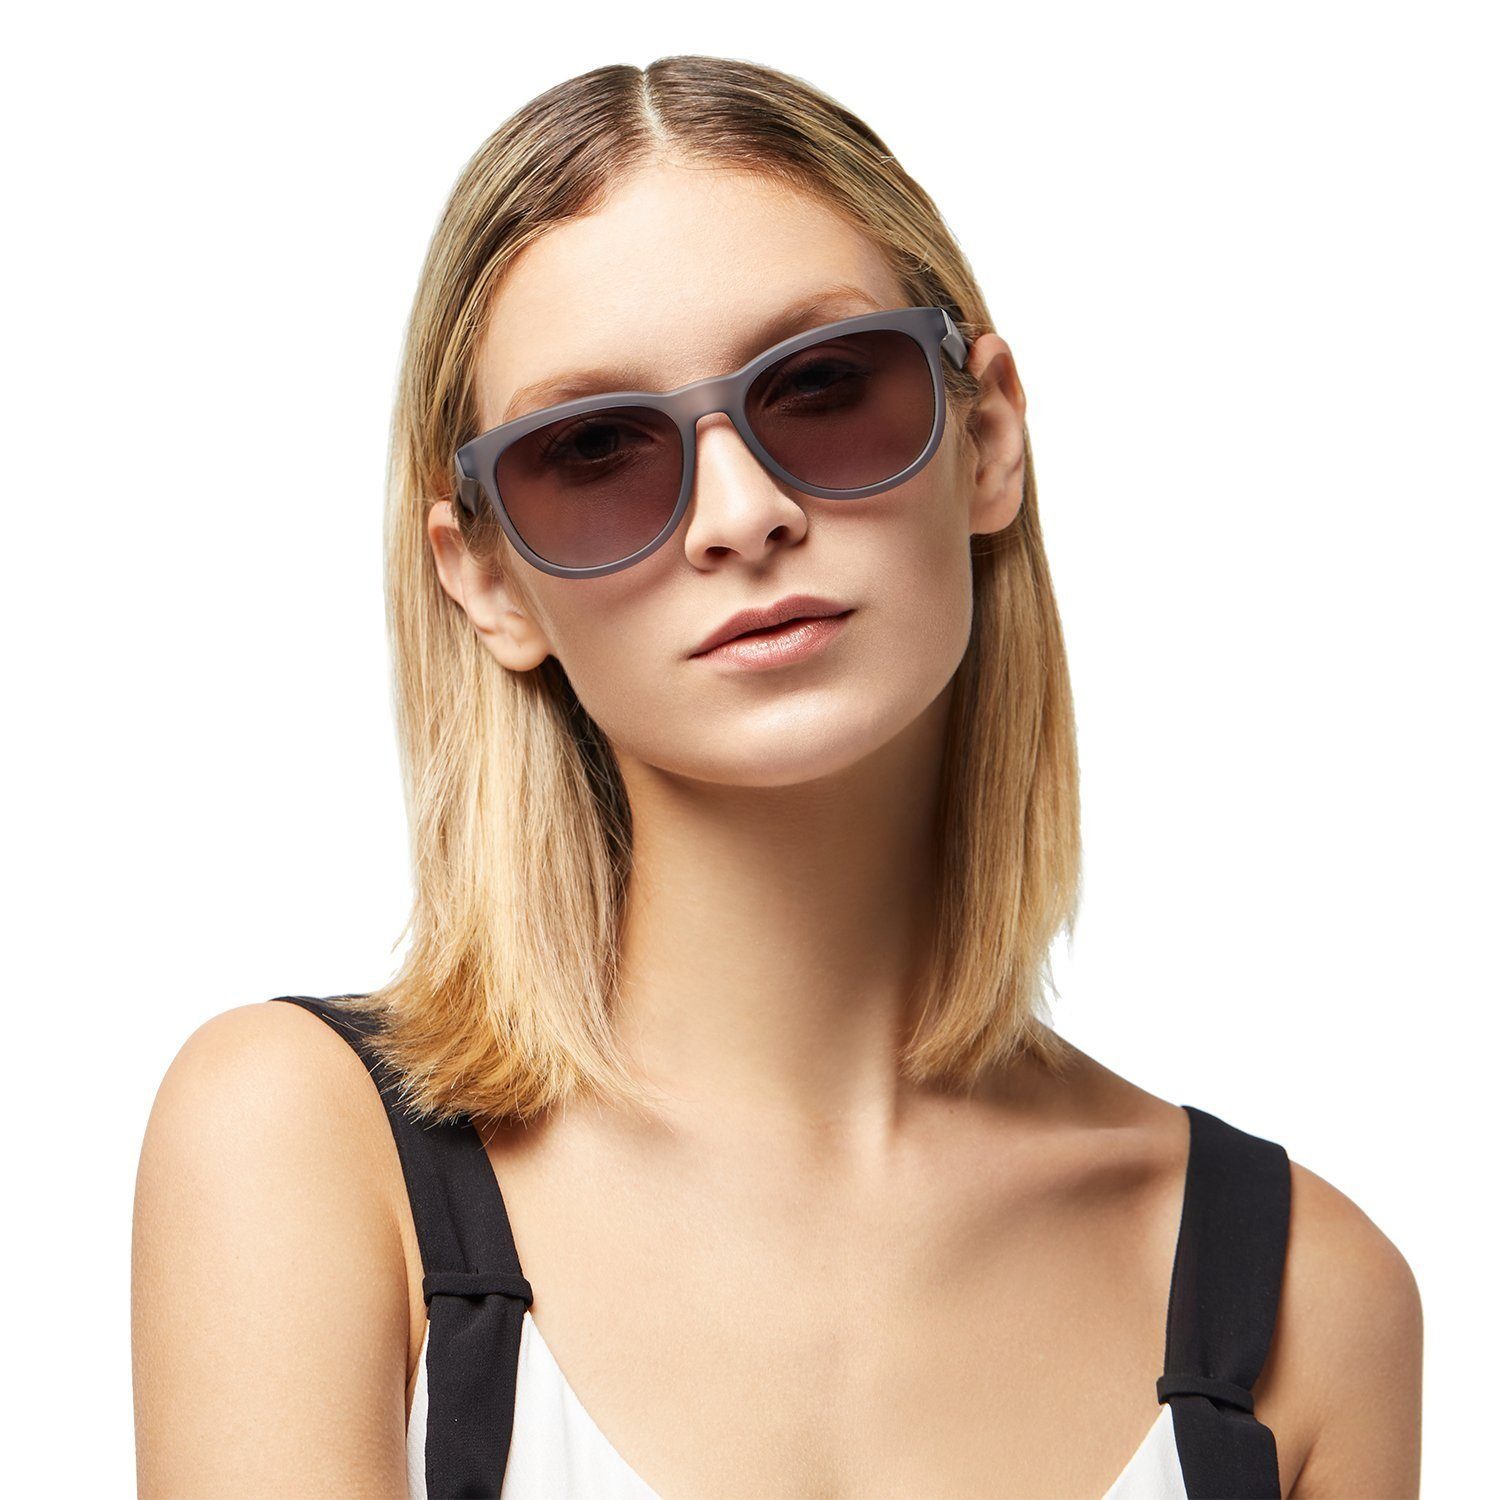 Sonnenbrille Polarisierte Brille Grau Elegear (Panto-Form, Damen Retro) Elegante